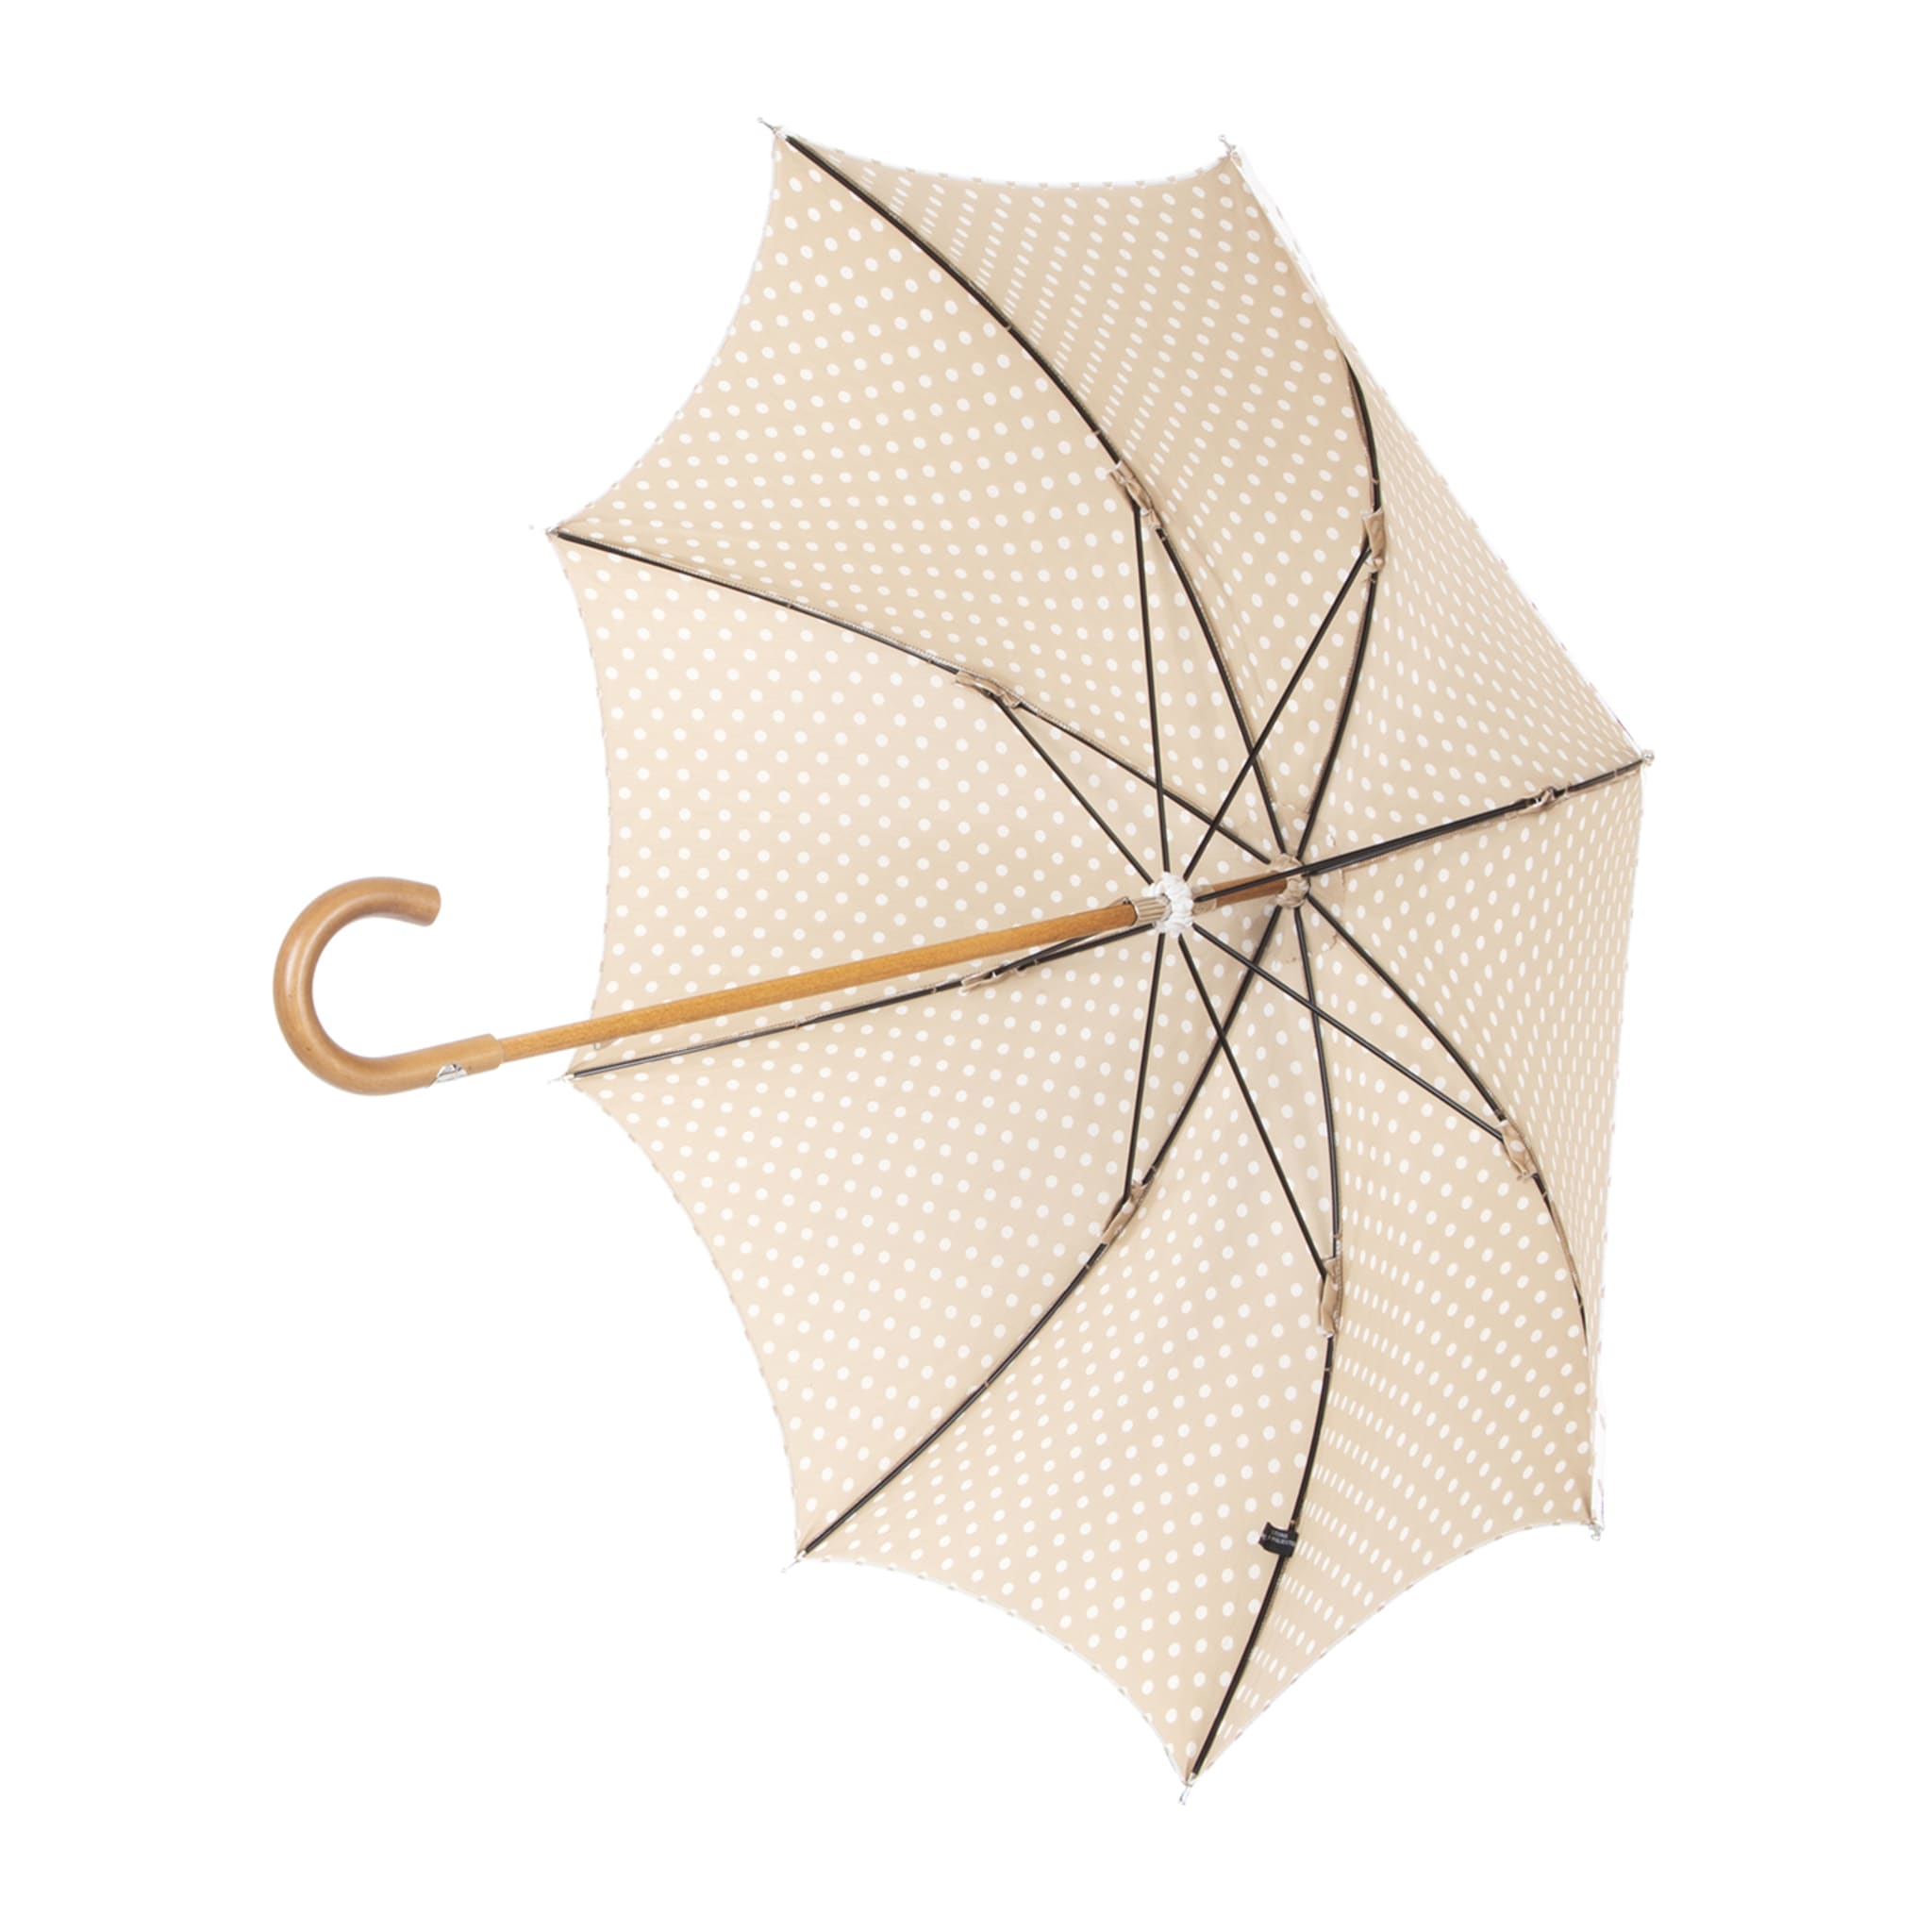 Ladies Ivory Polkdot Umbrella - Alternative view 1